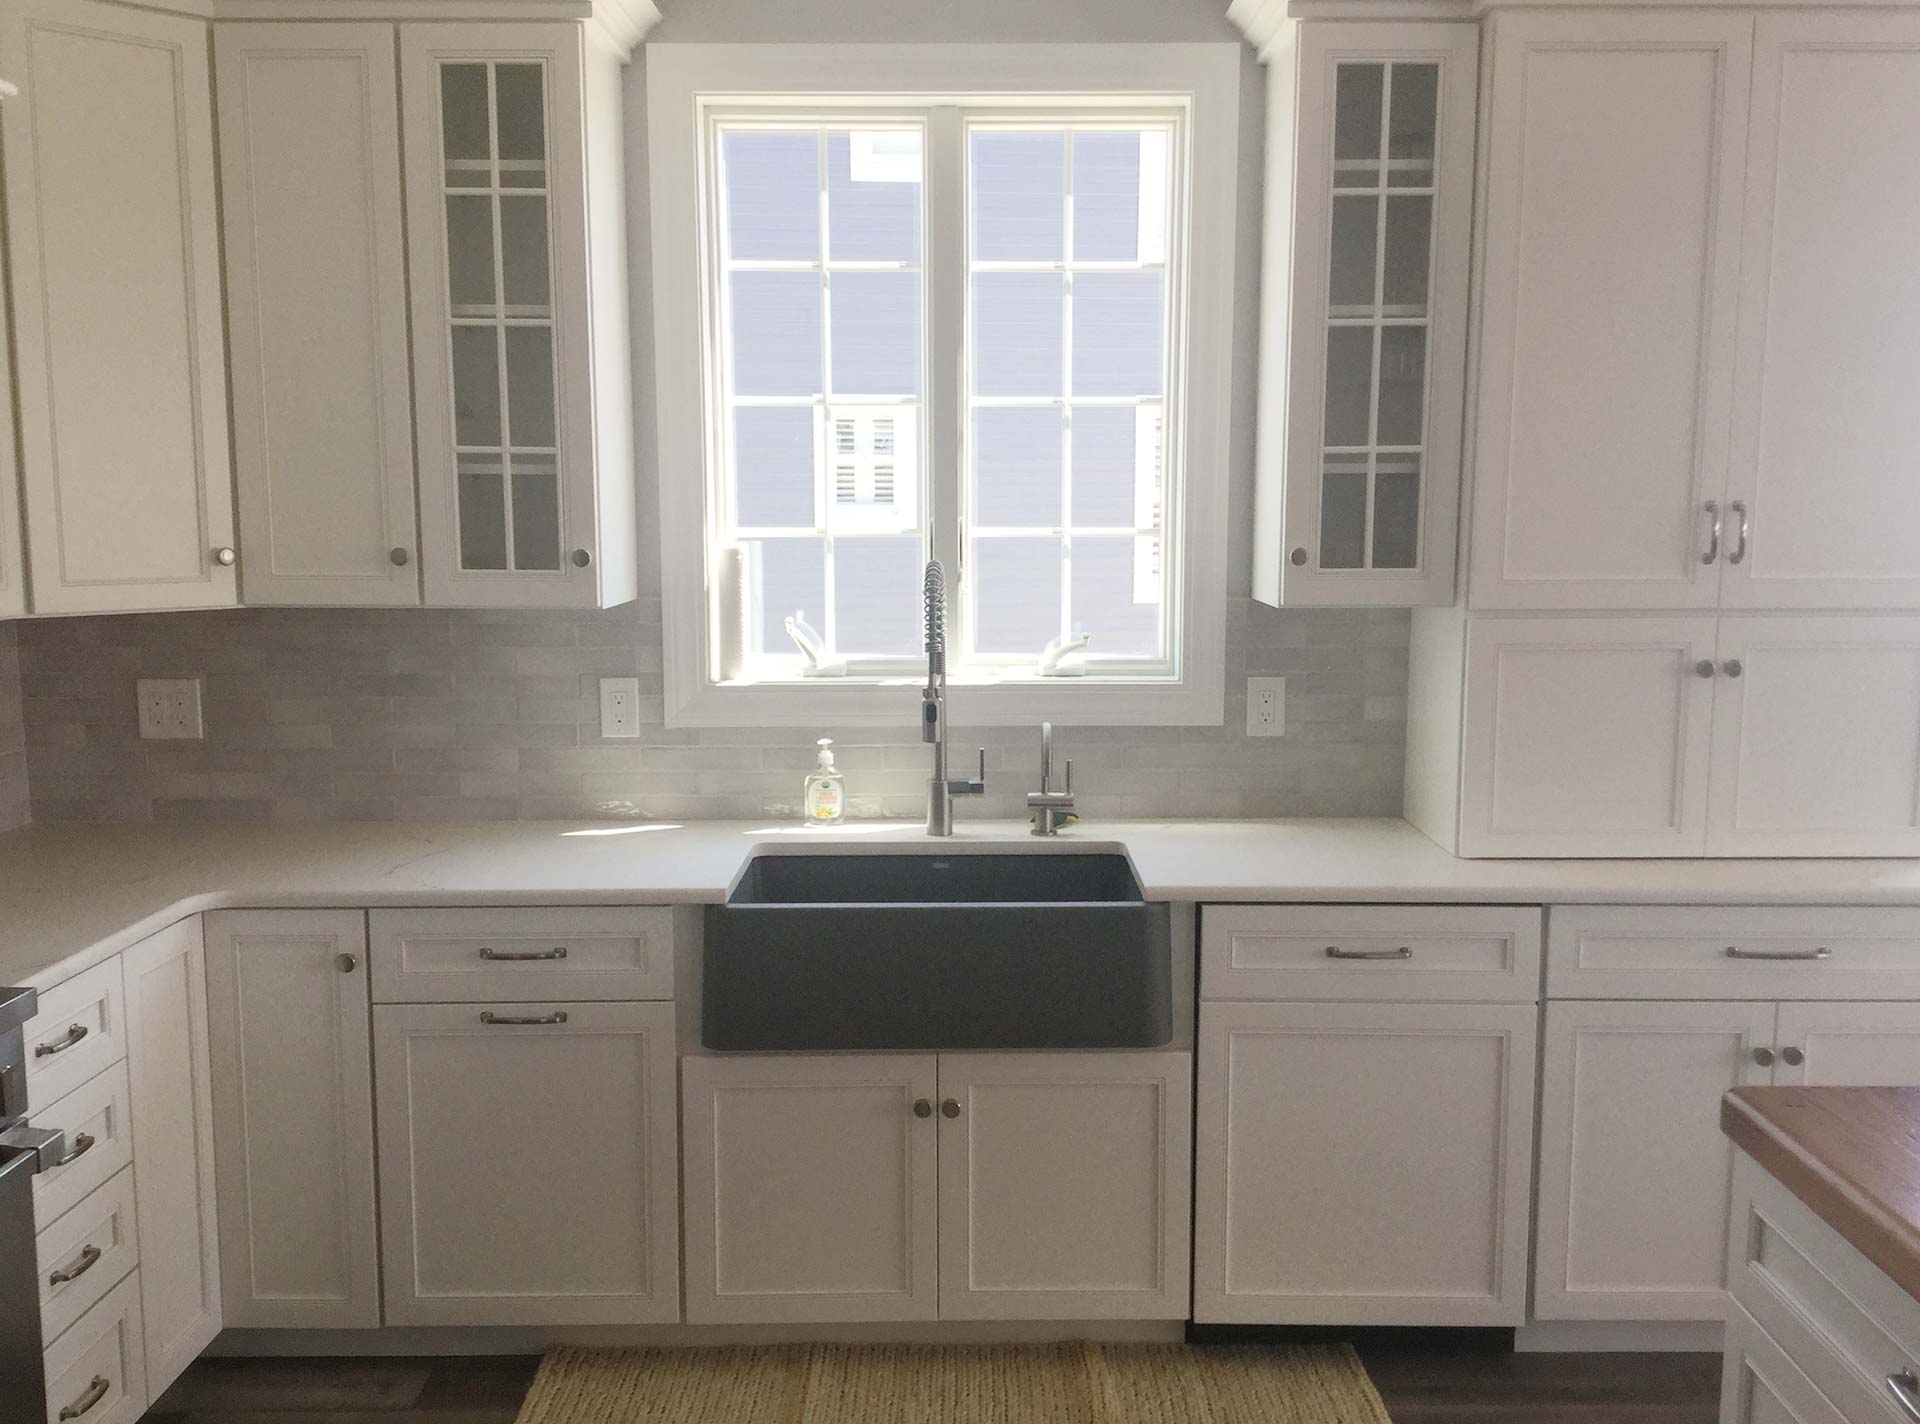 White custom cabinets and window